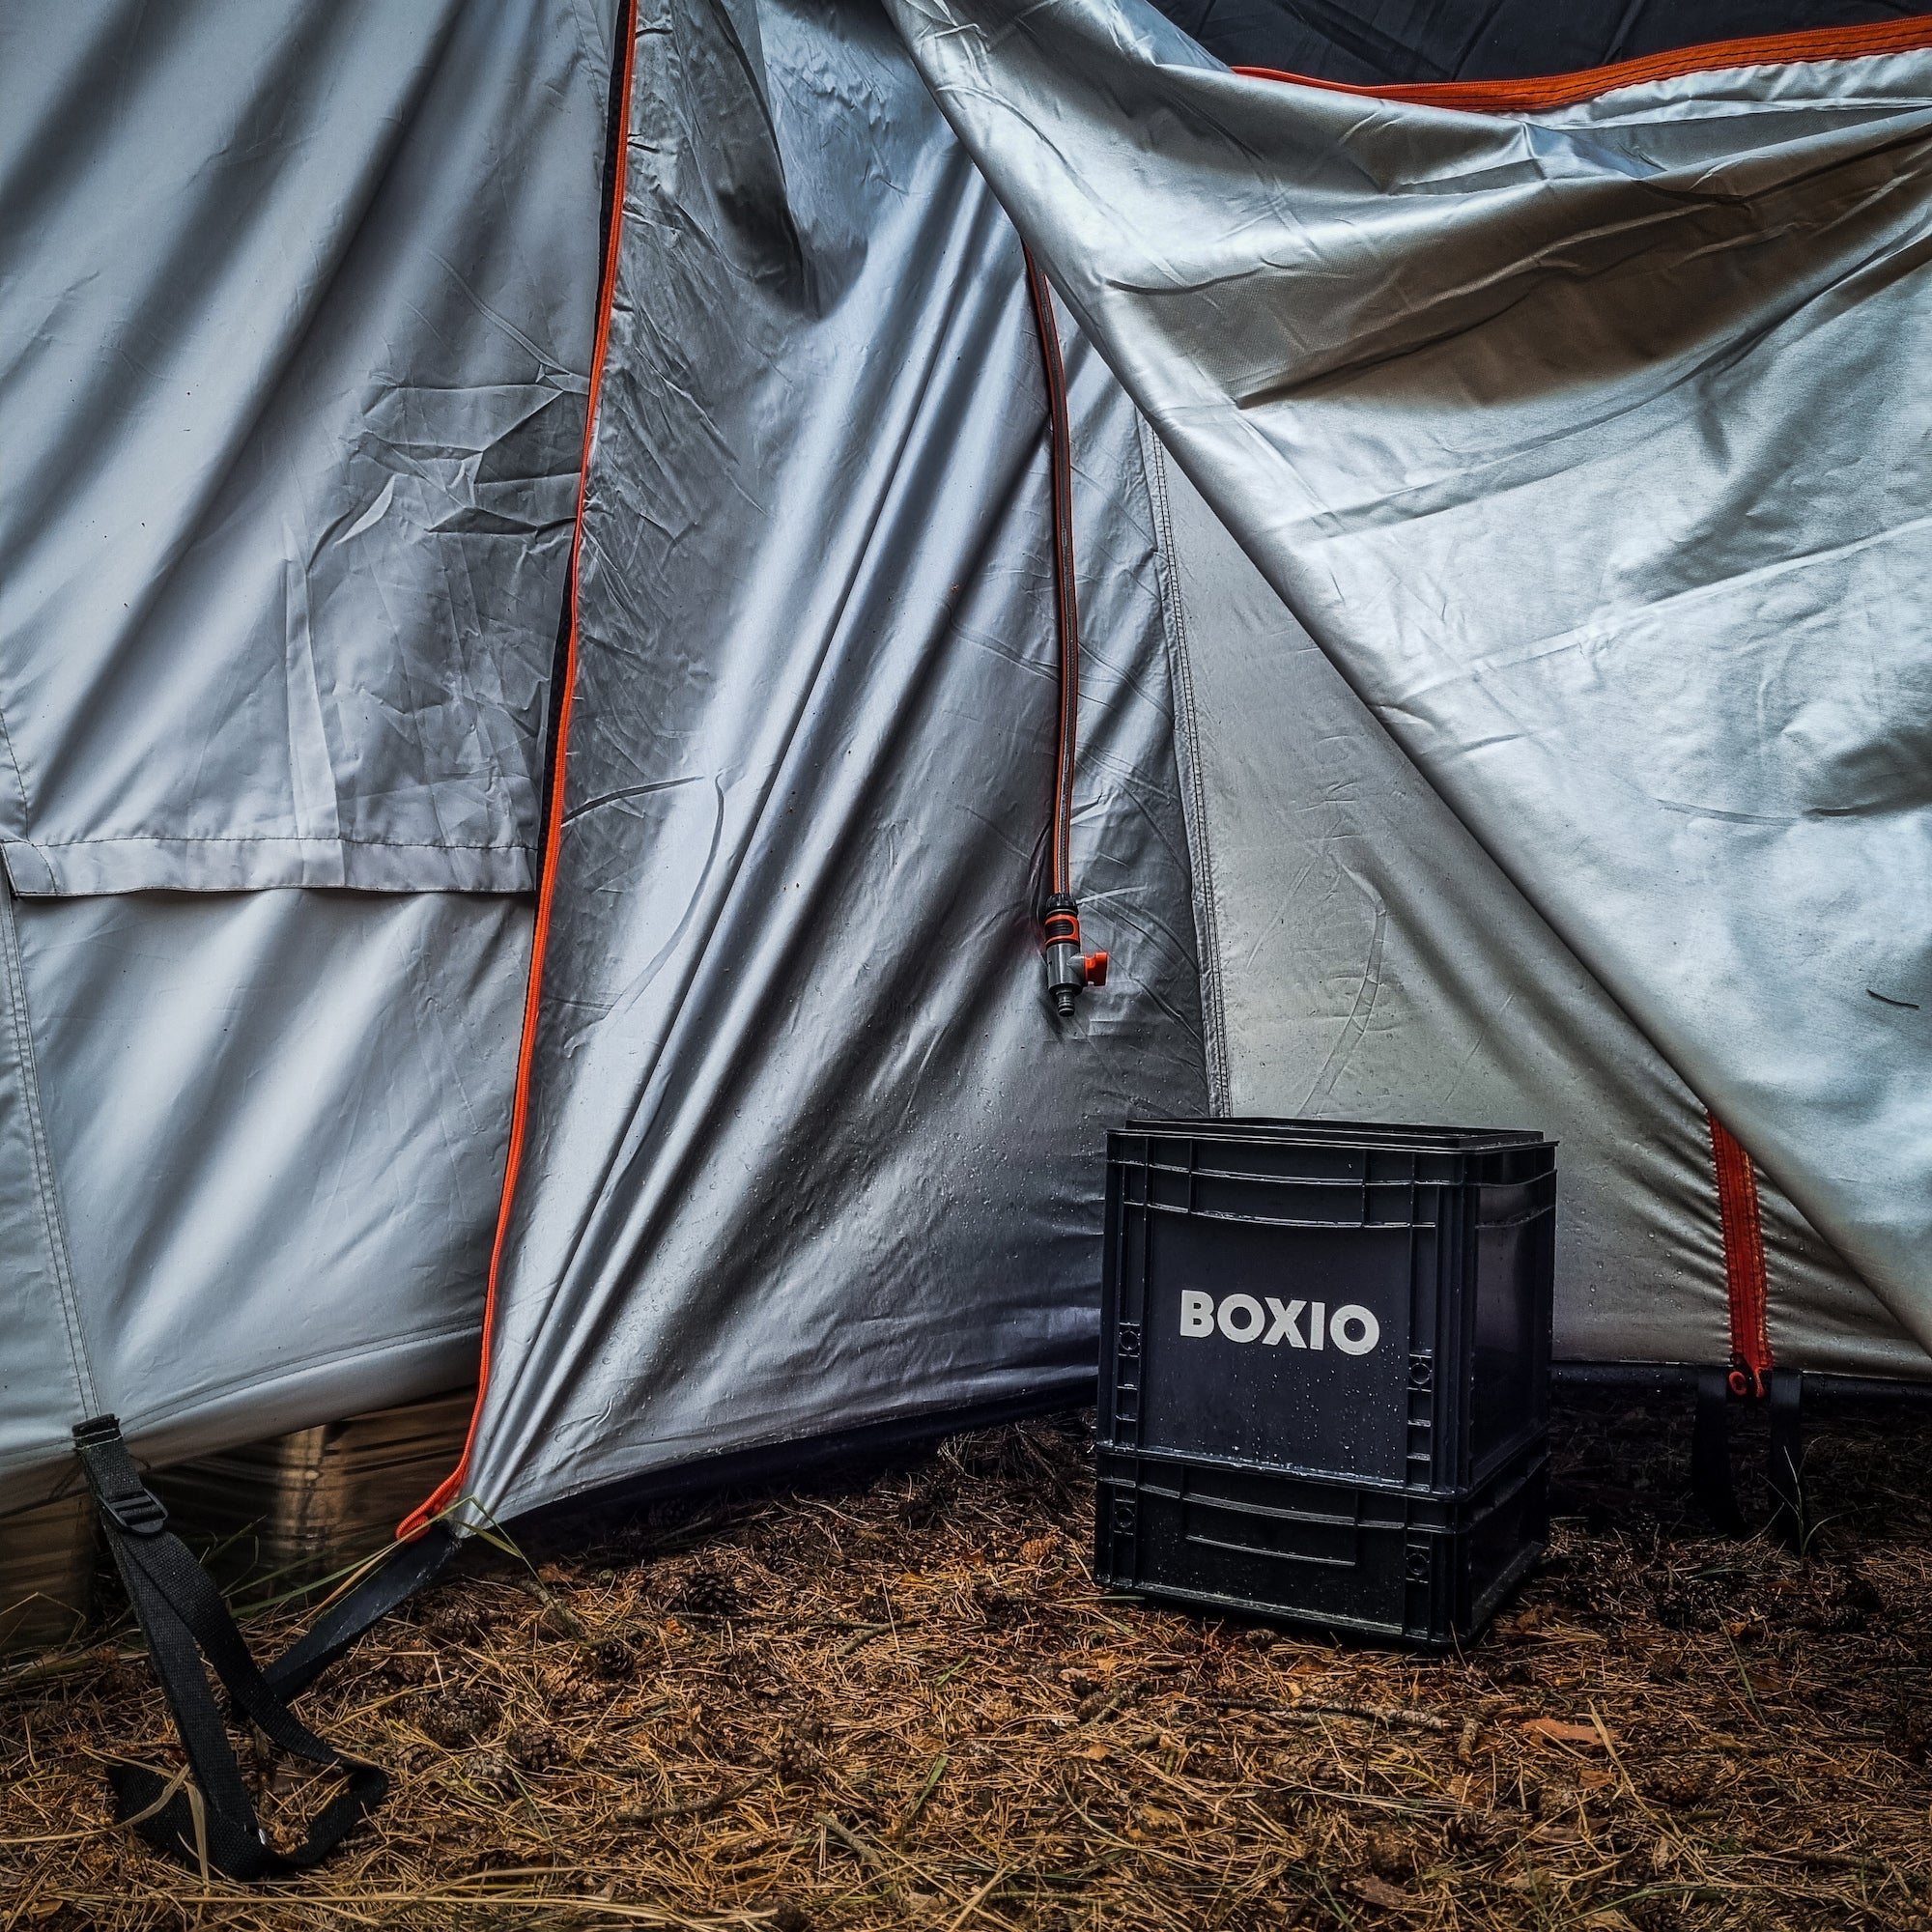 ➡️ Test: BOXIO Separating Toilet For Camping, Van Life & Crises